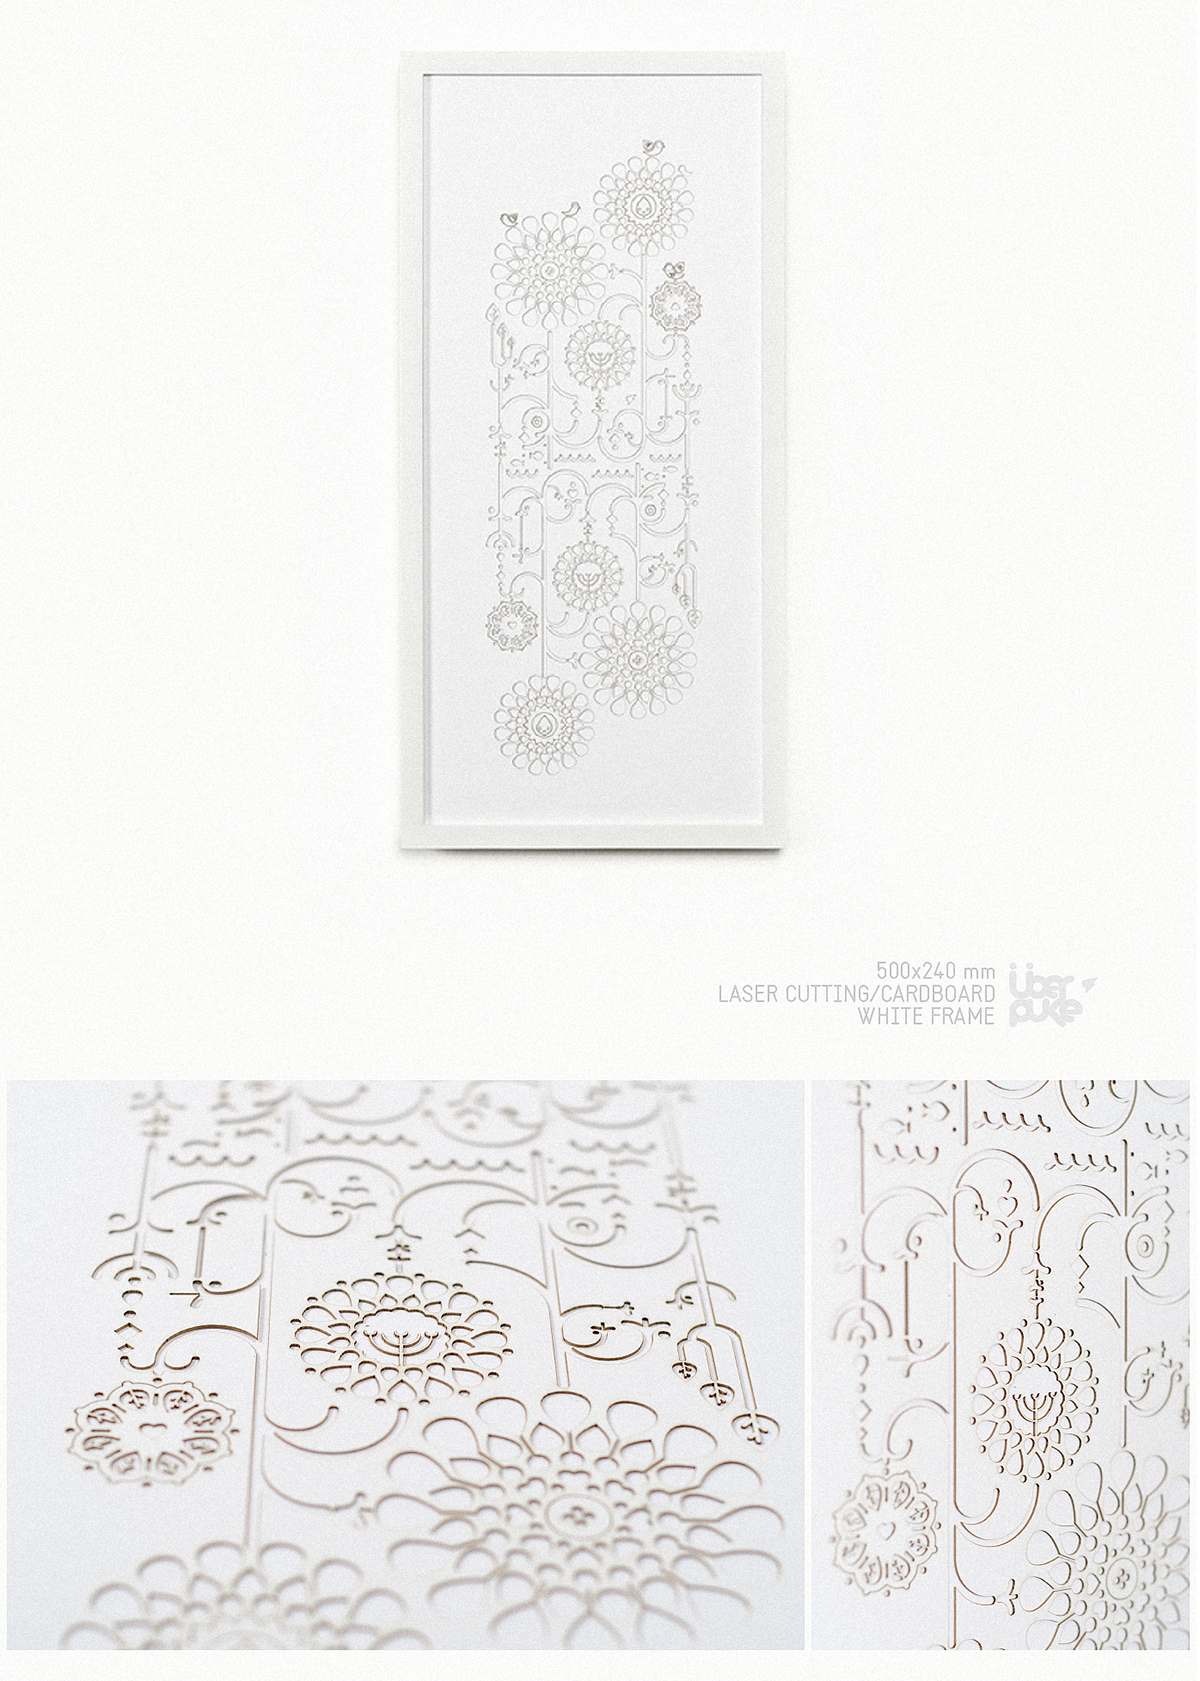 Mandala framed bogota laser cut cardboard mdf engraving print uberpuke javier mozo laser carton White gold black